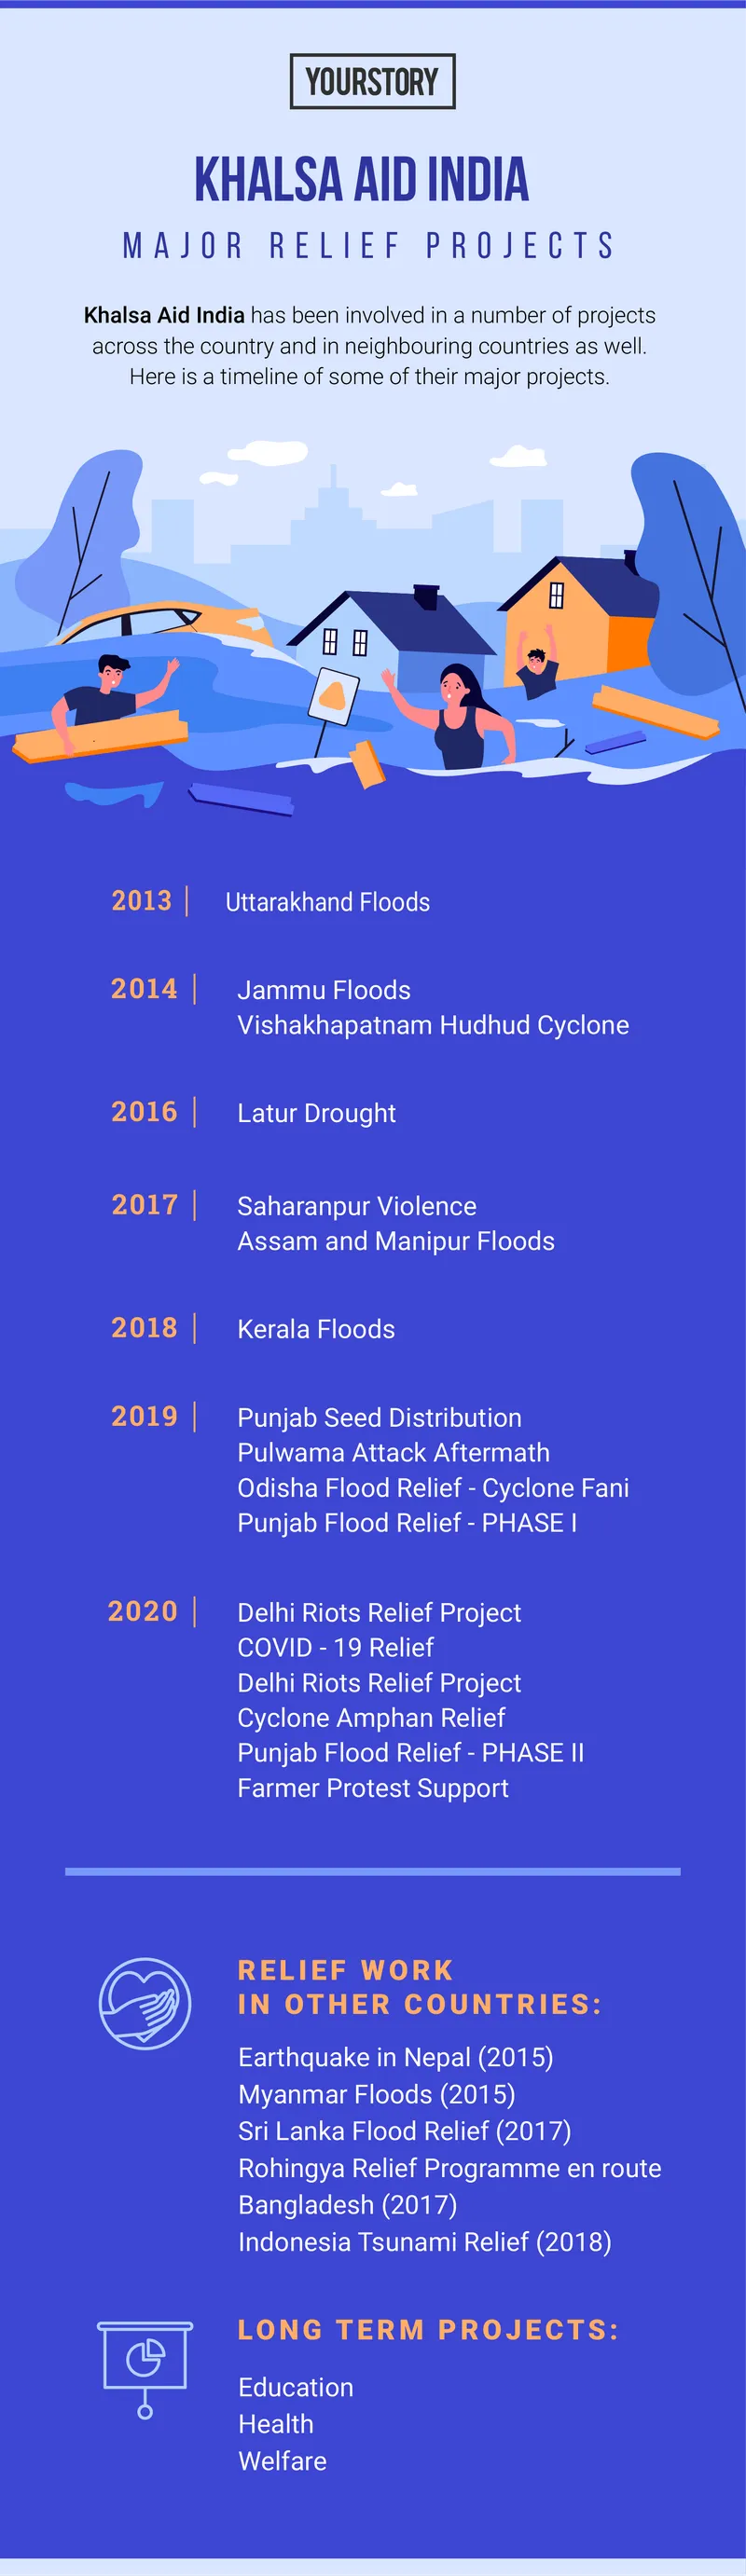 Khalsa Aid India timeline